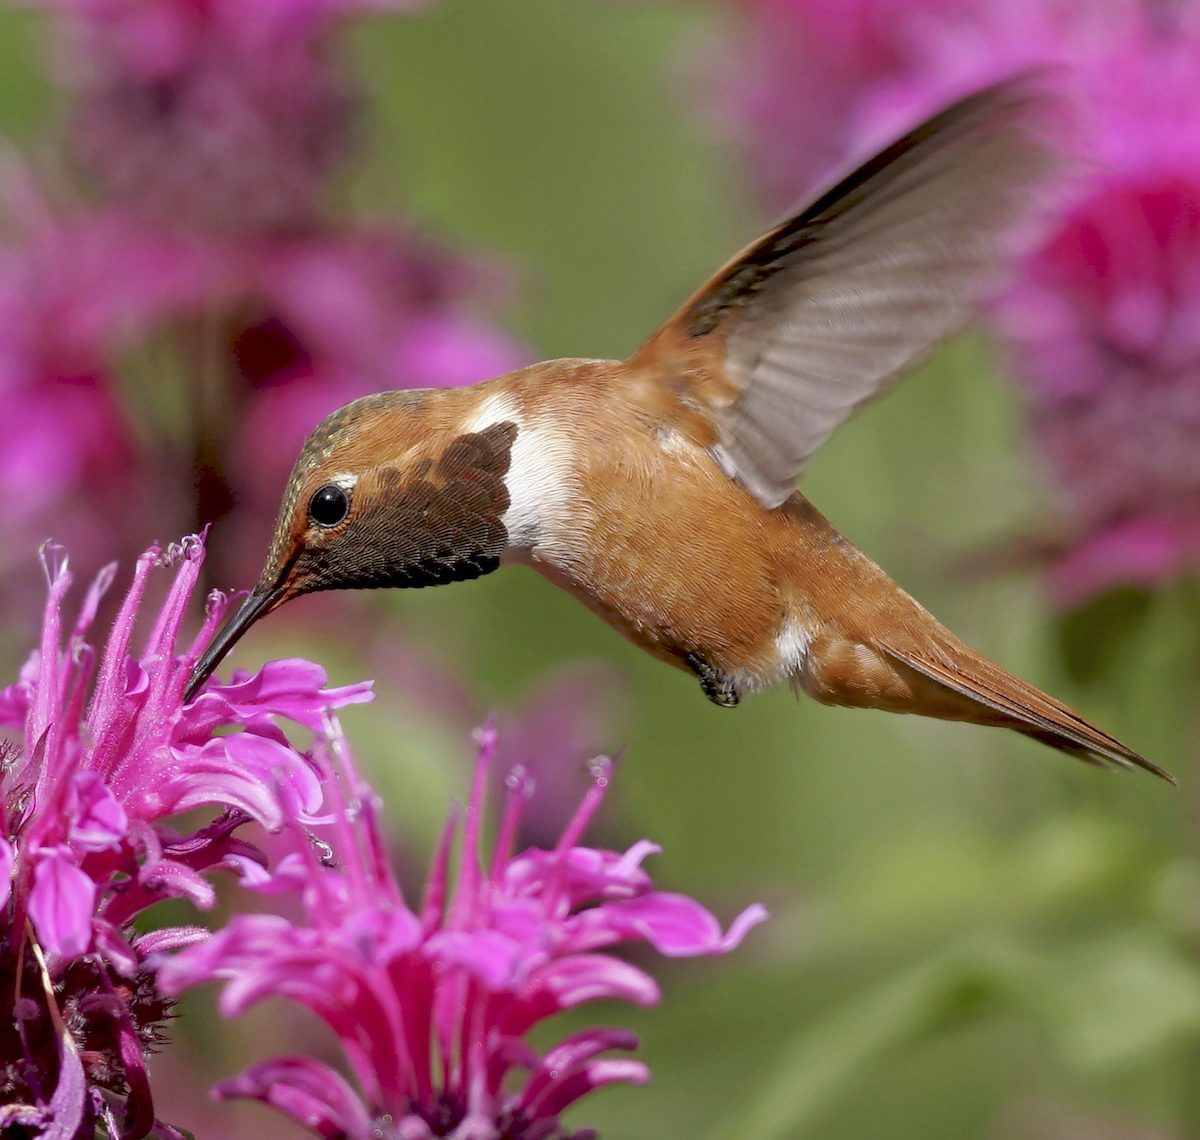 The Top 10 Hummingbird Wildflowers to Grow